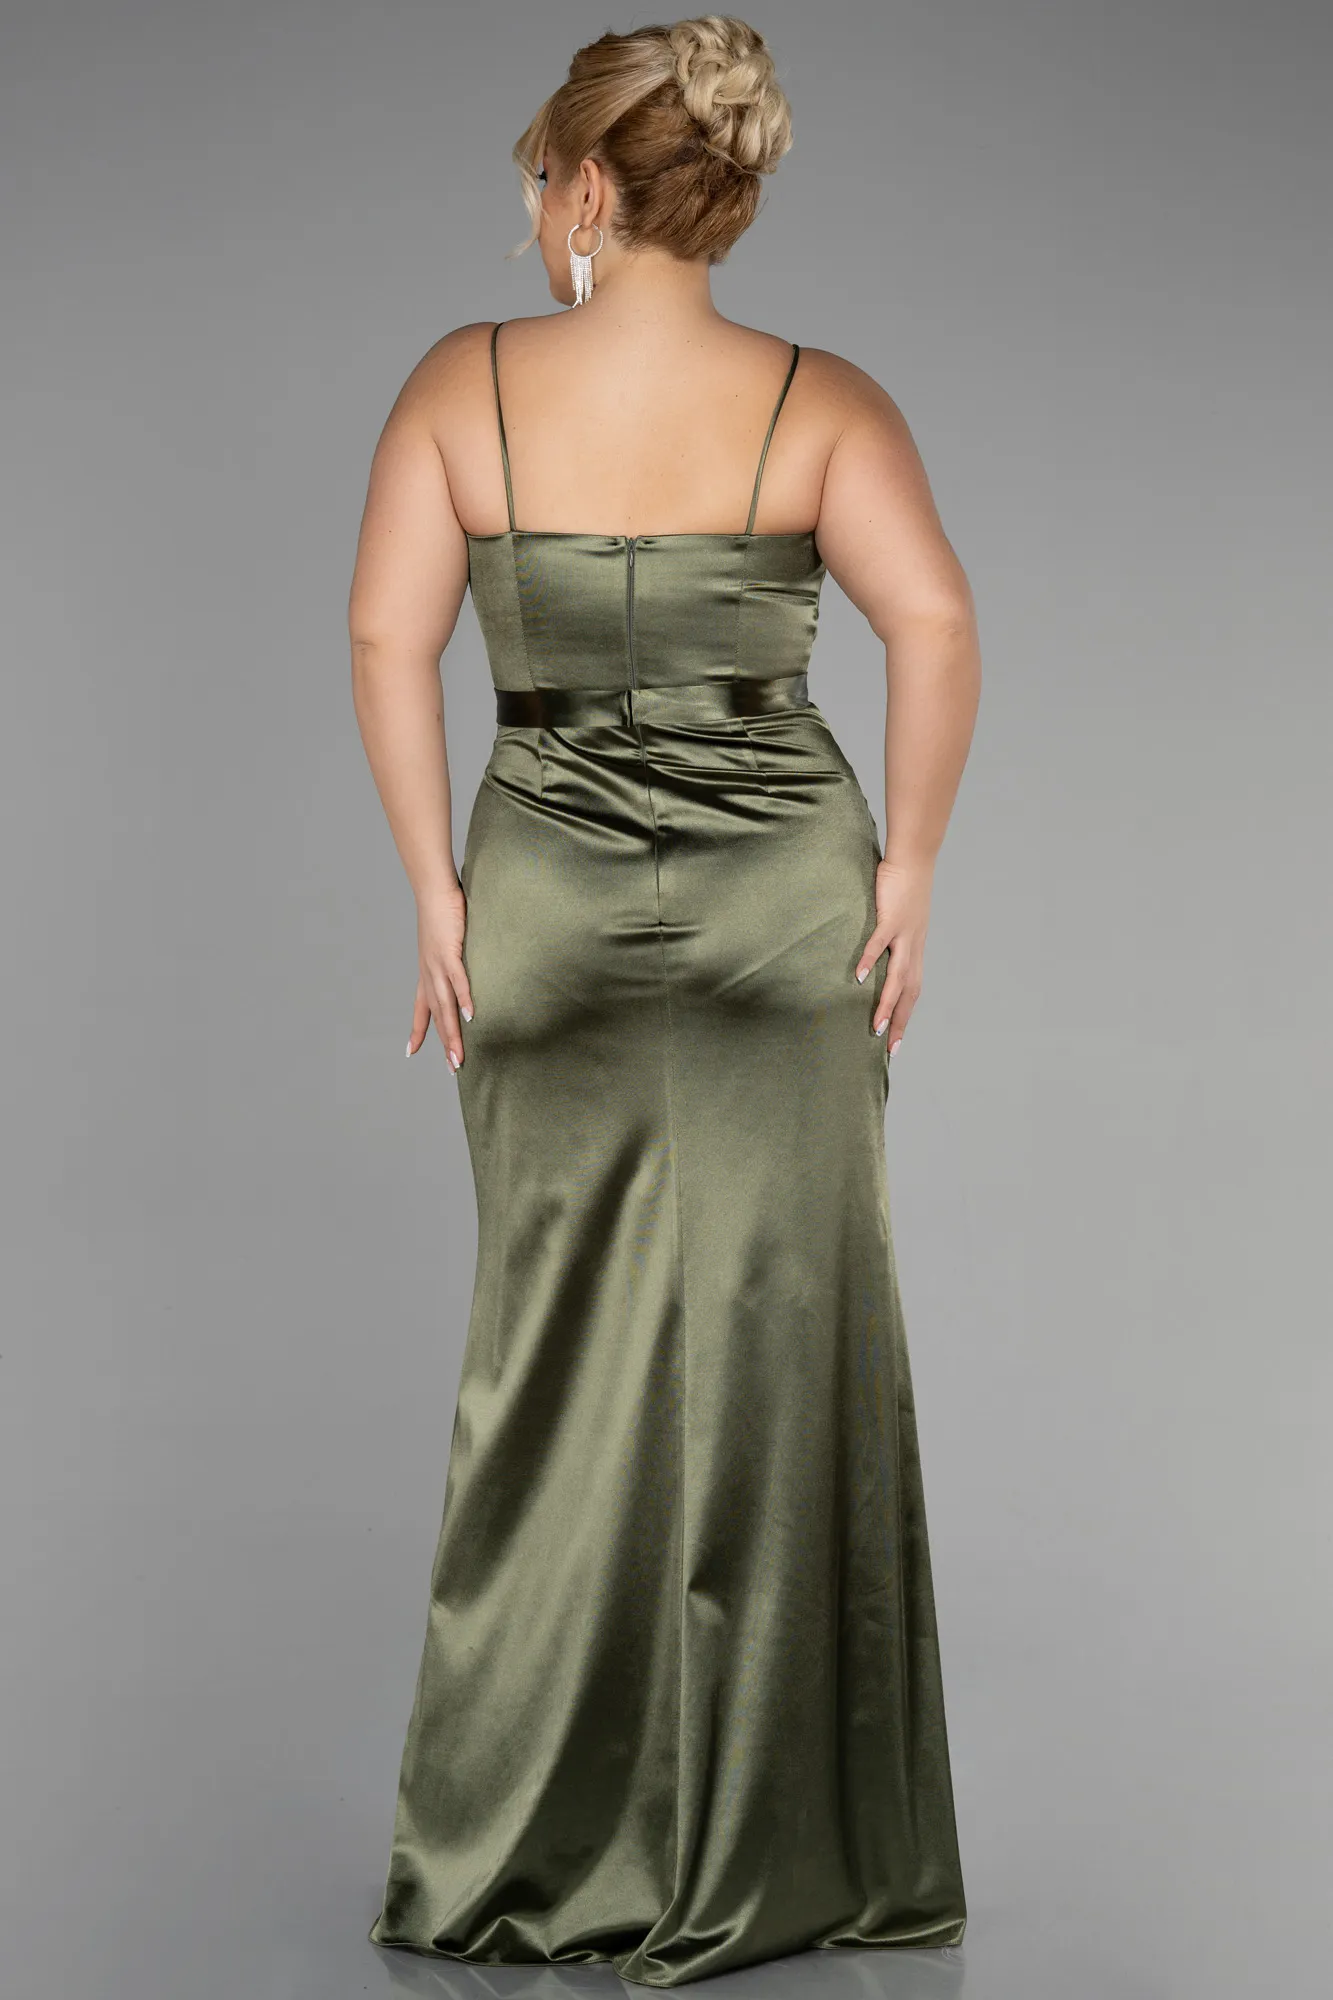 Olive Drab-Long Plus Size Graduation Dress ABU3481